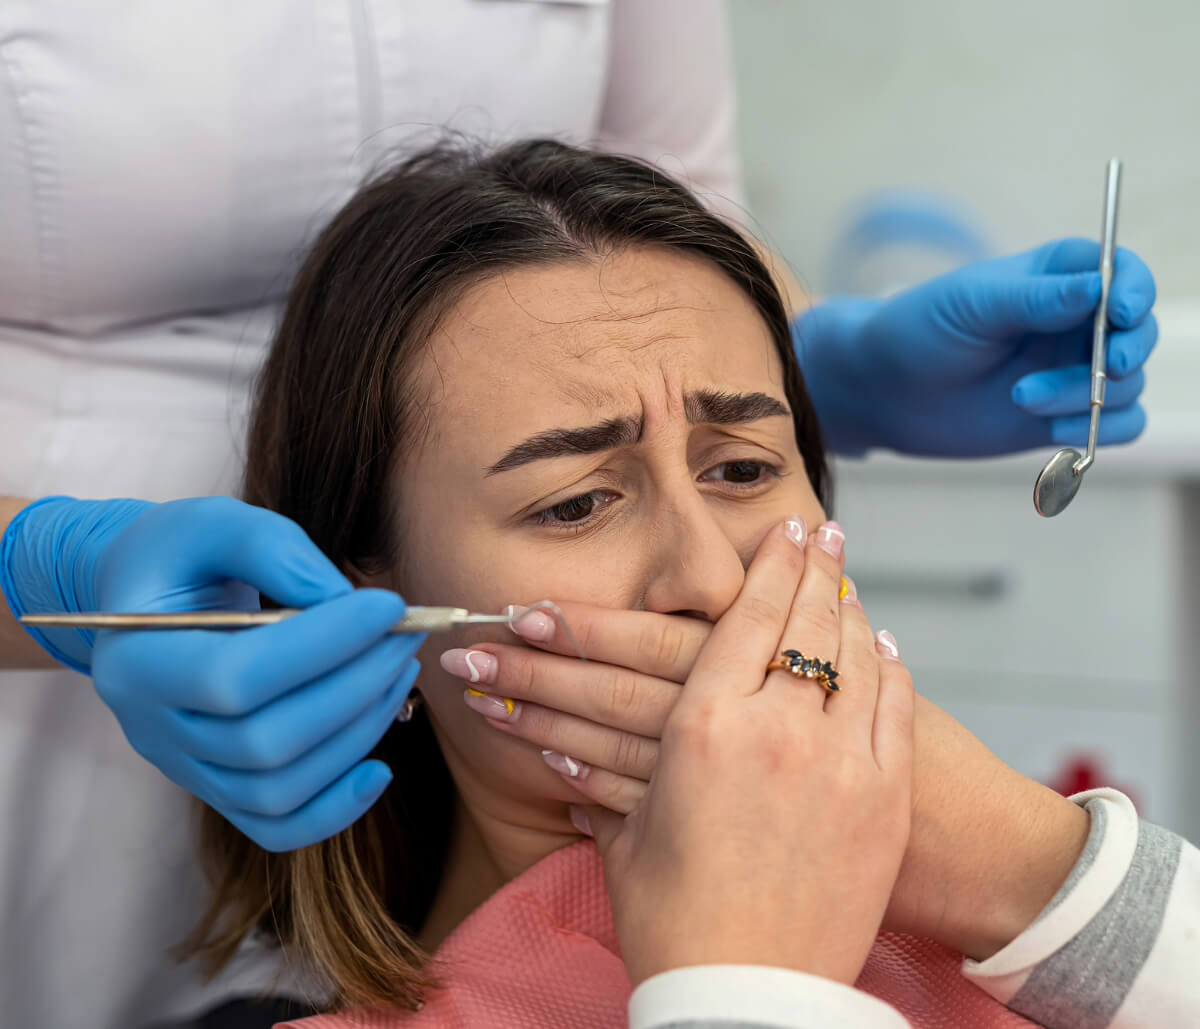 Dentist Anxiety Relief in Glen Allen VA area